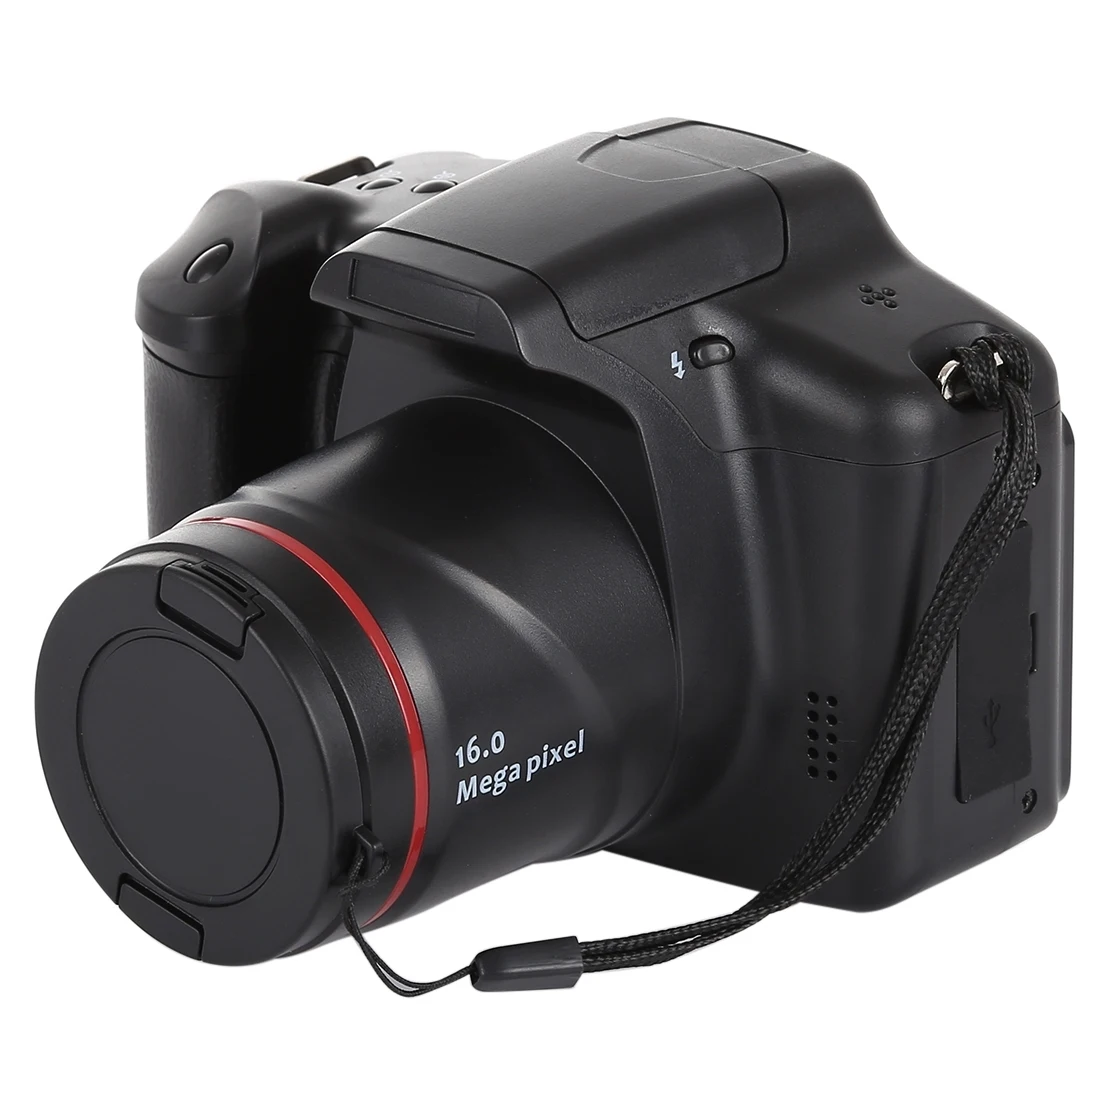 

Cheap Digital Photo Camera Professional 1.3 Mega Pixel HD DV SLR Camera, 2.4 inch LCD, Full HD 720P Recording, EIS